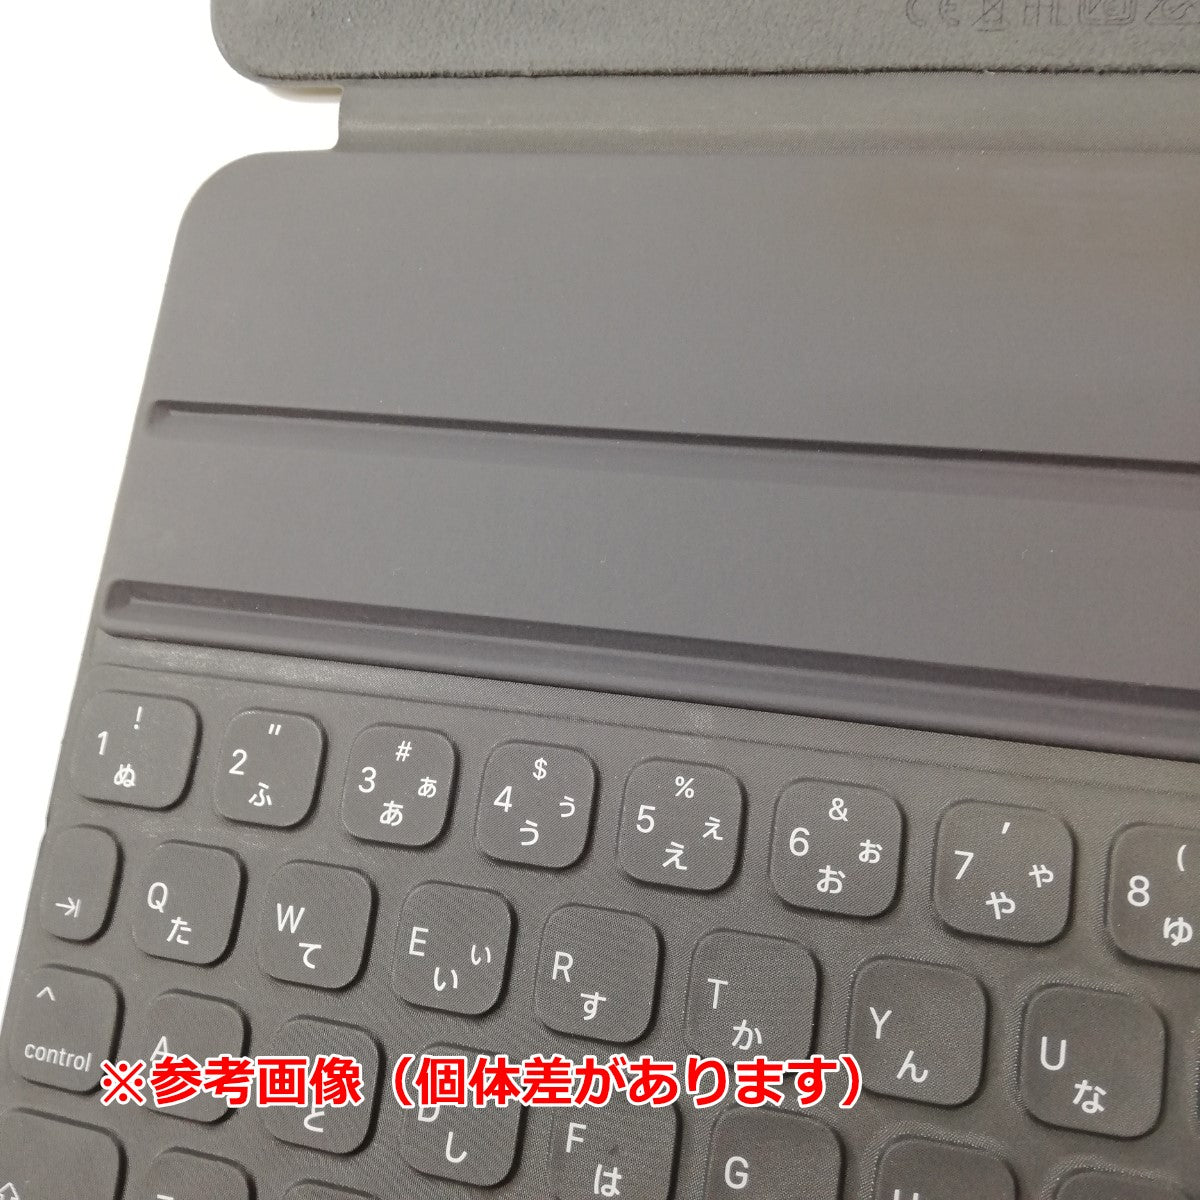 中古品】 iPadPro(11-inch) Smart Keyboard Folio MU8G2J/A [管理番号 